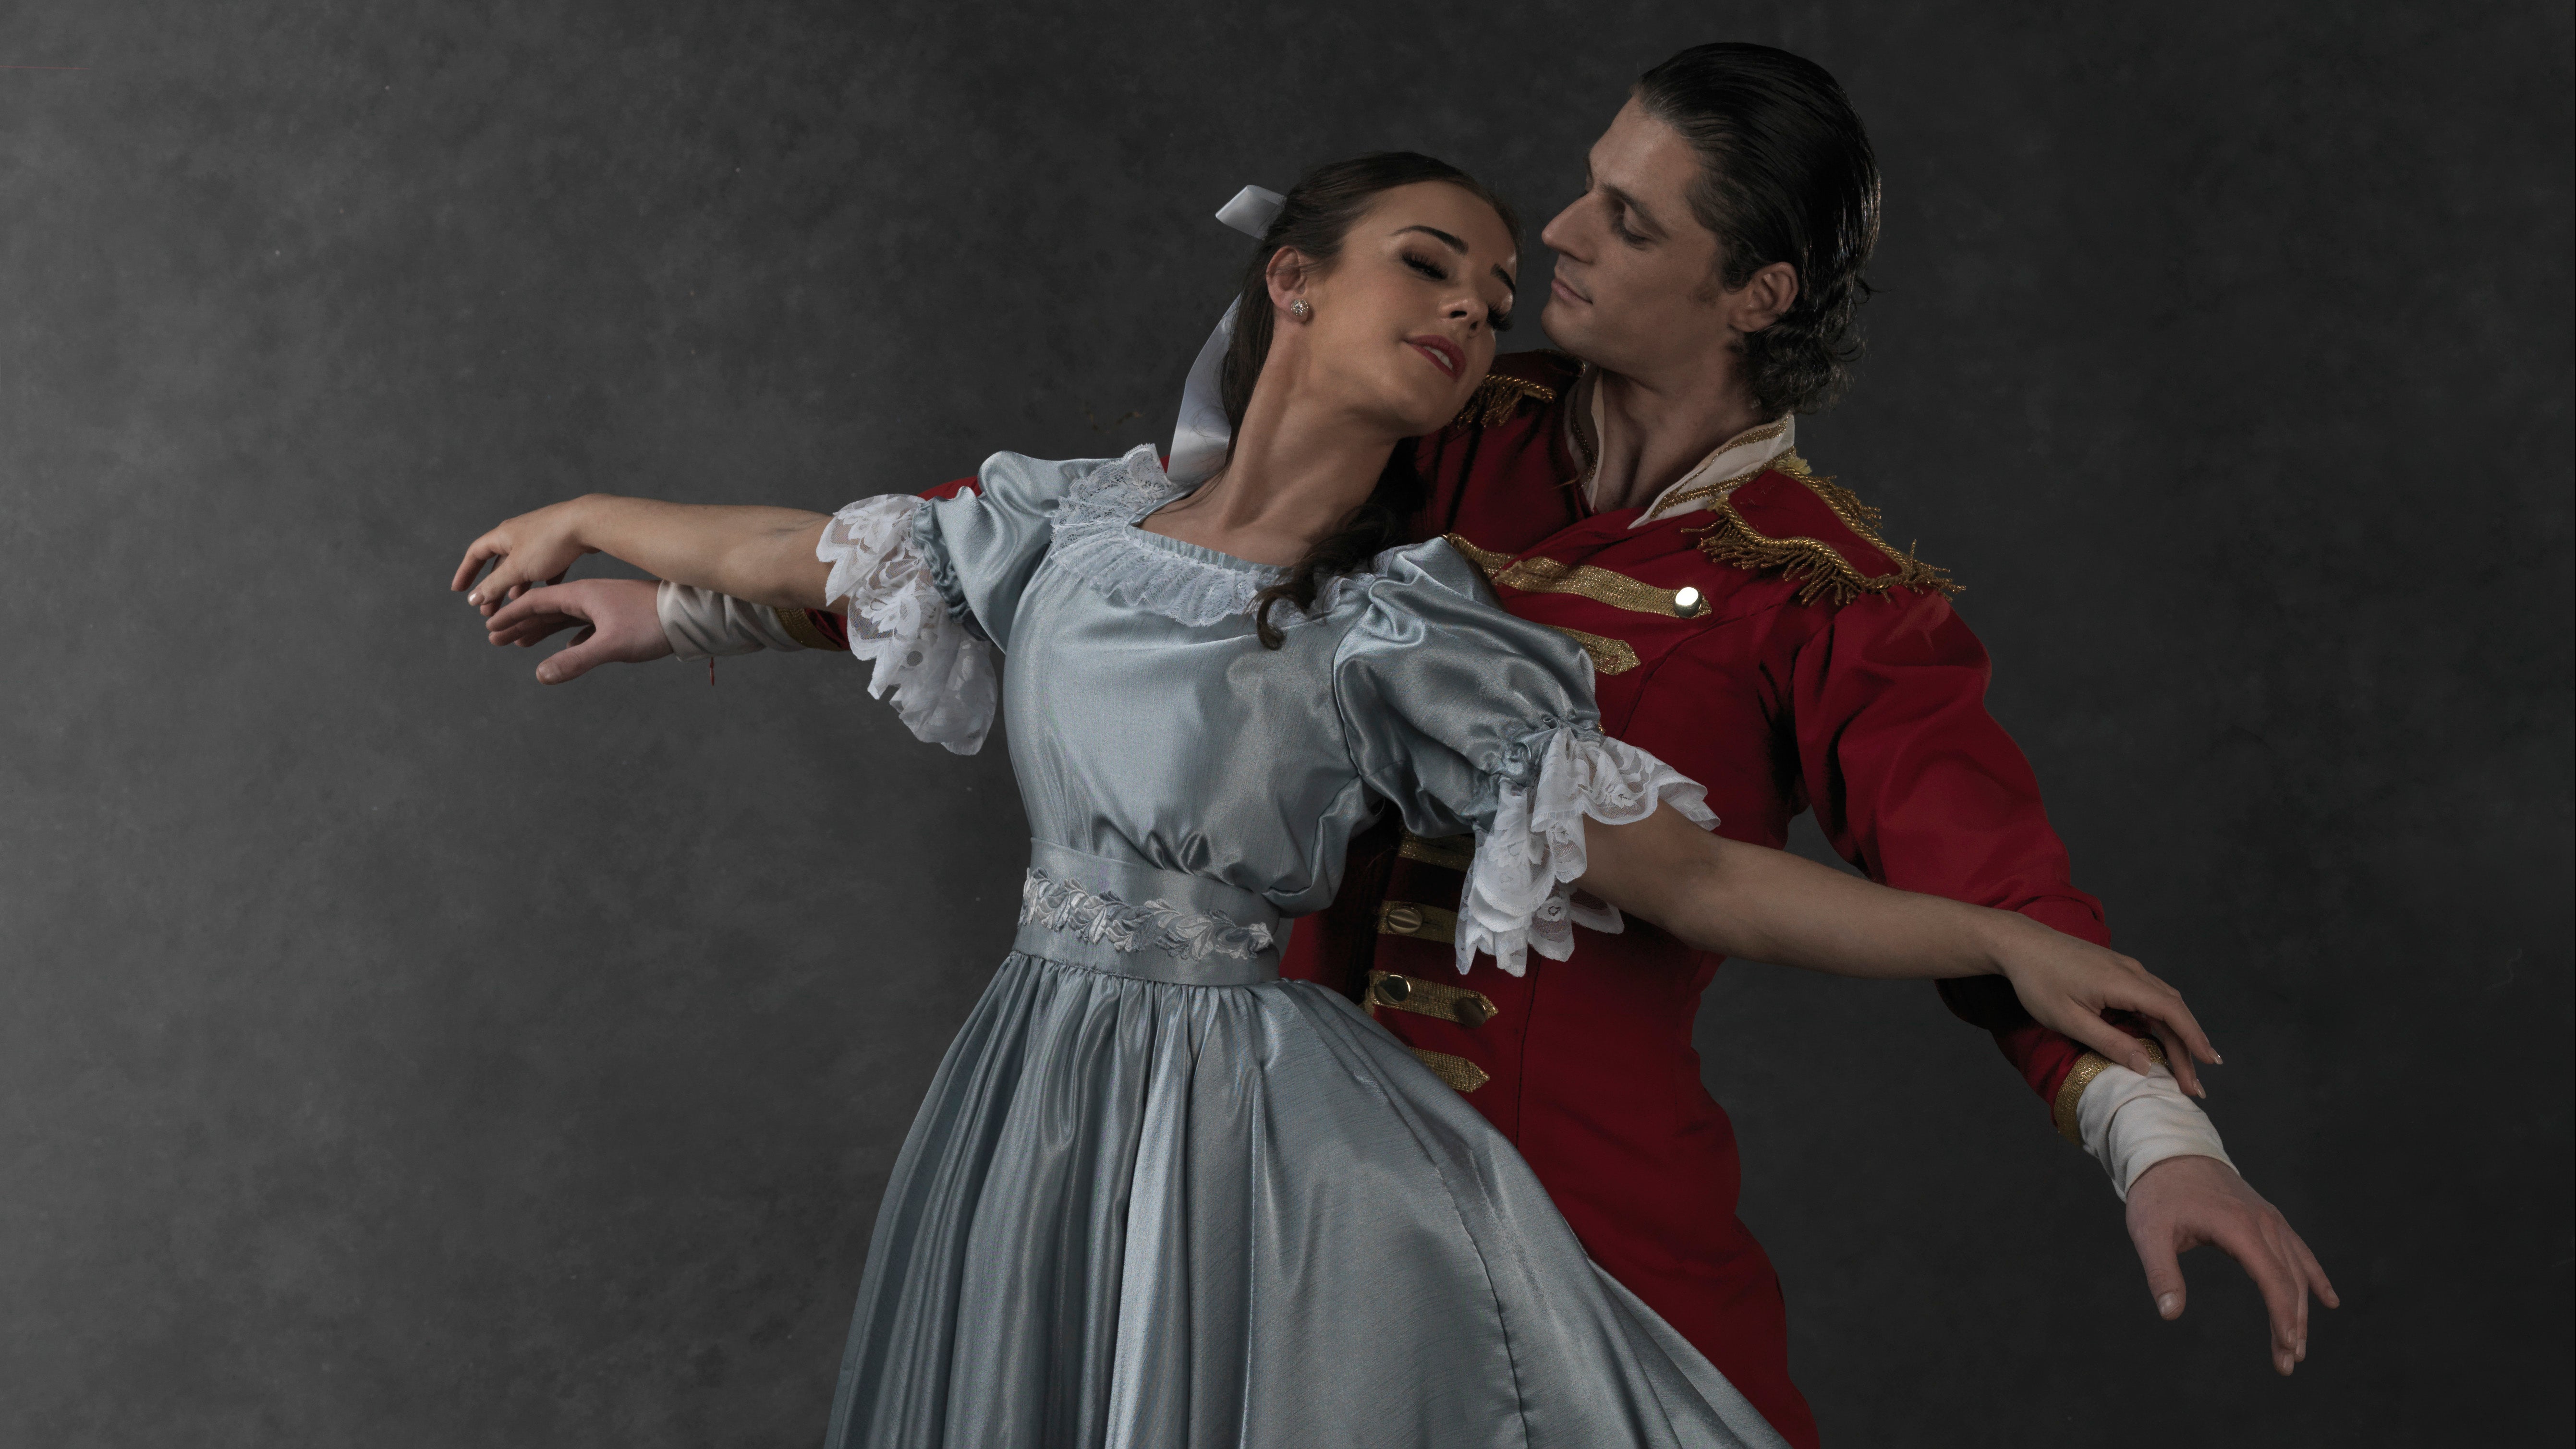 Cinderella - Victorian State Ballet in St Kilda promo photo for Exclusive presale offer code